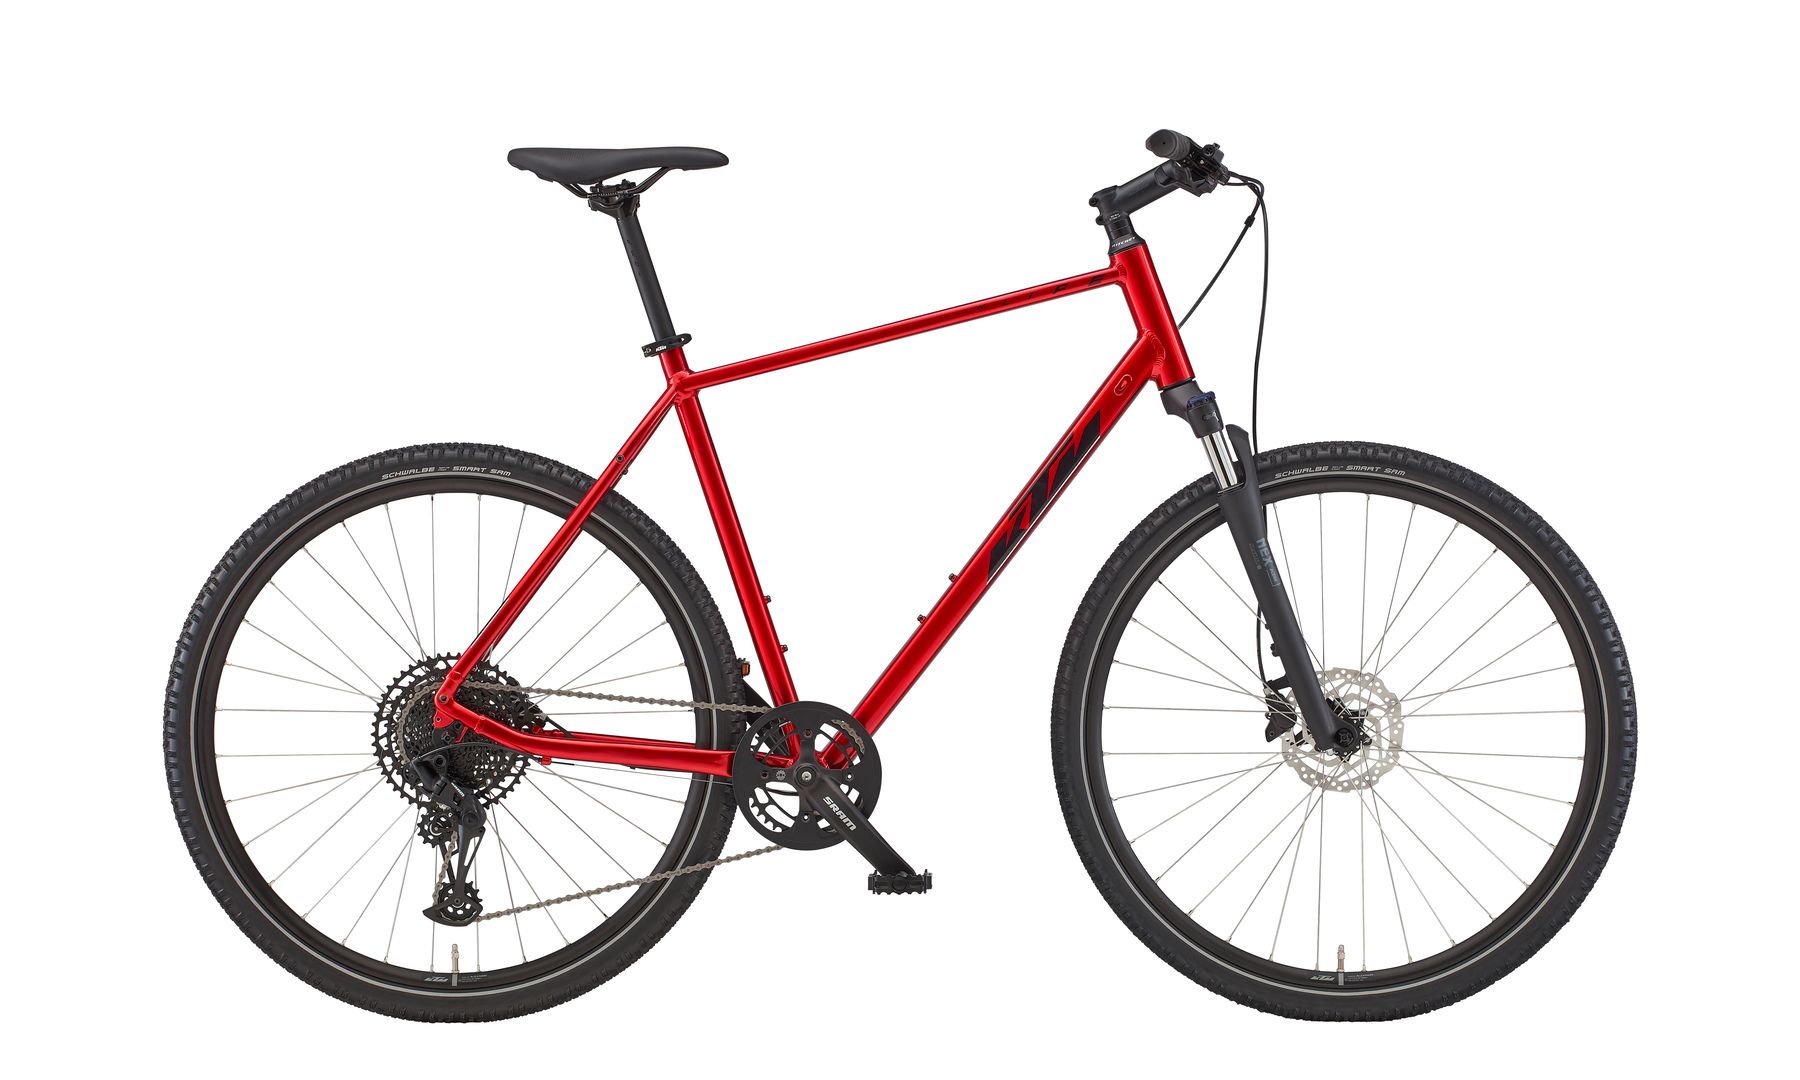 Bicycle KTM X-LIFE CROSS chrome red (black+silver) 1x12 SRAM SX